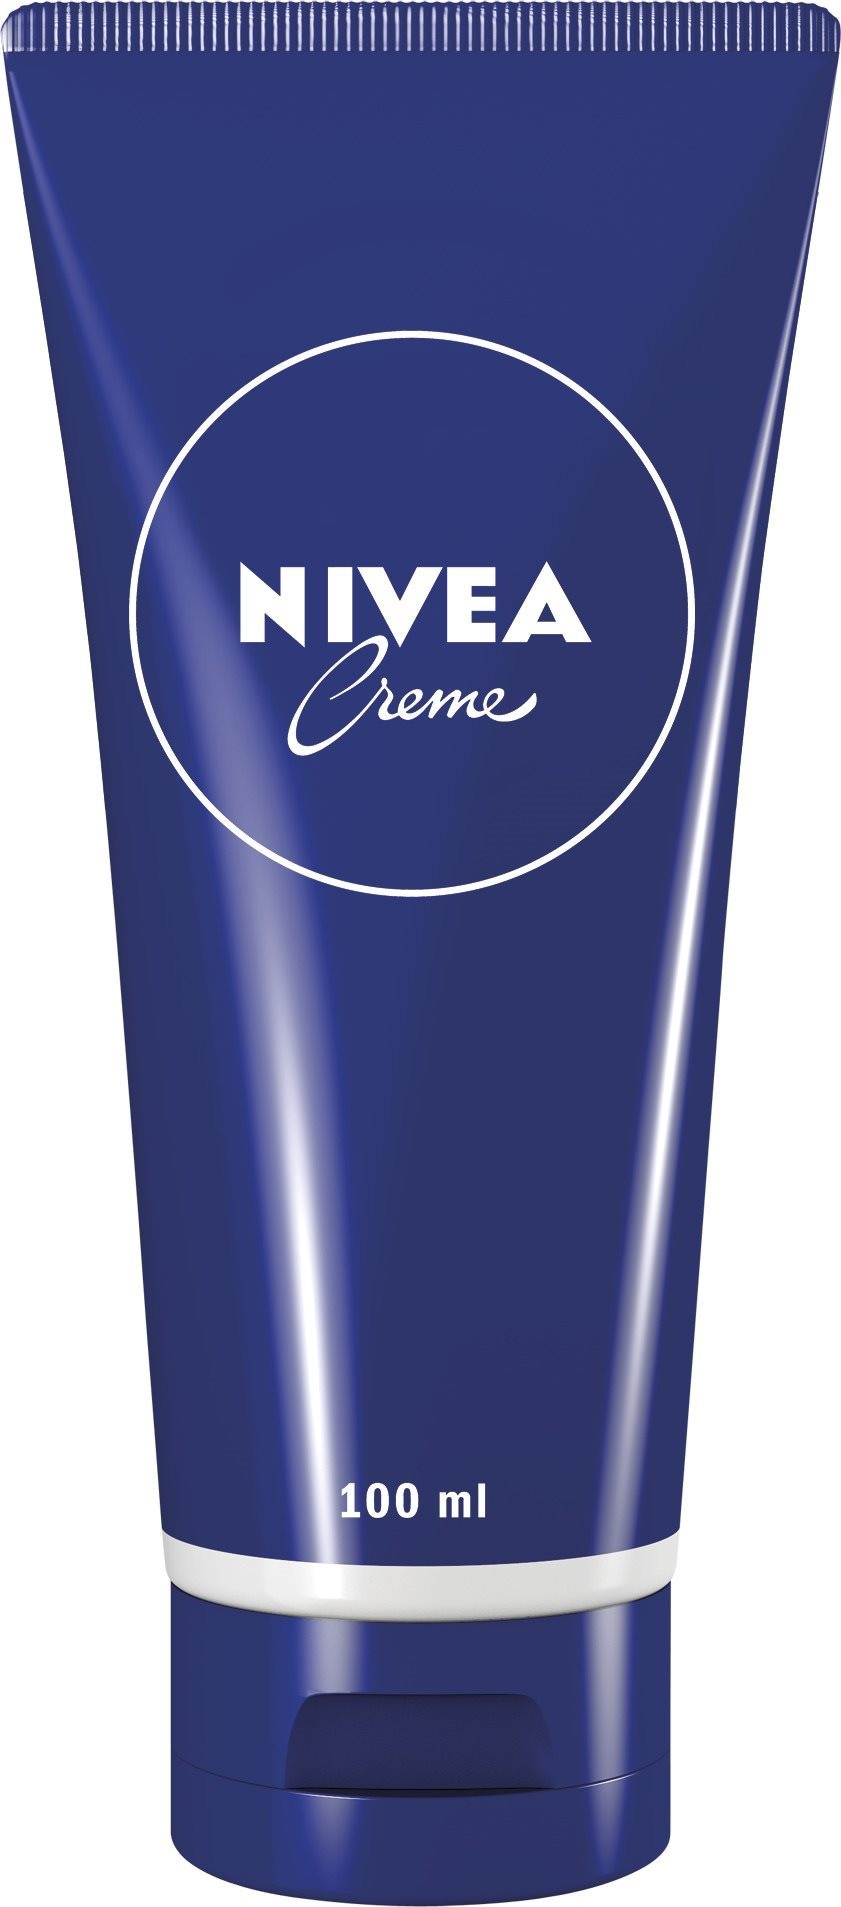 NIVEA Creme Tube 100 ml